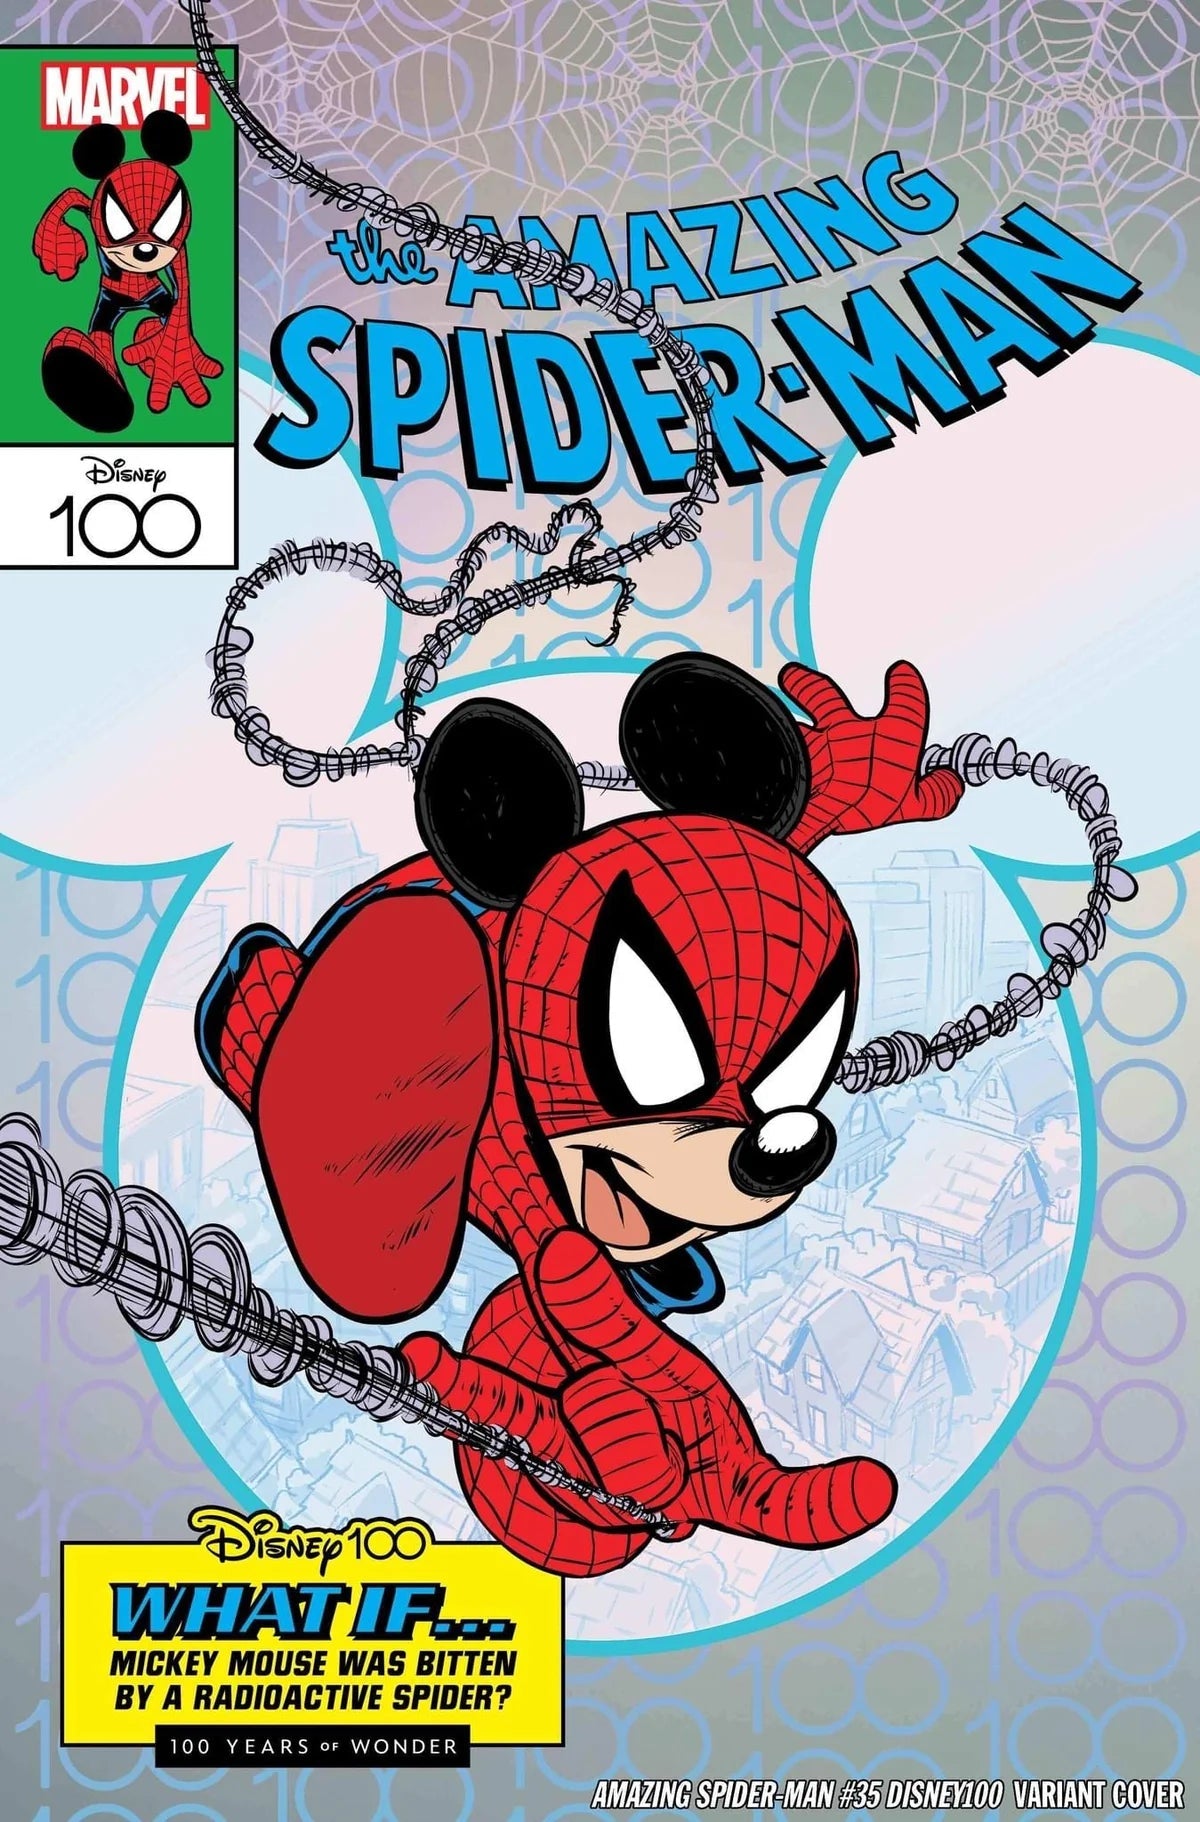 Amazing Spider-Man #35 Disney 100 Claudio Sciarrone 300 Homage Variant - FURYCOMIX